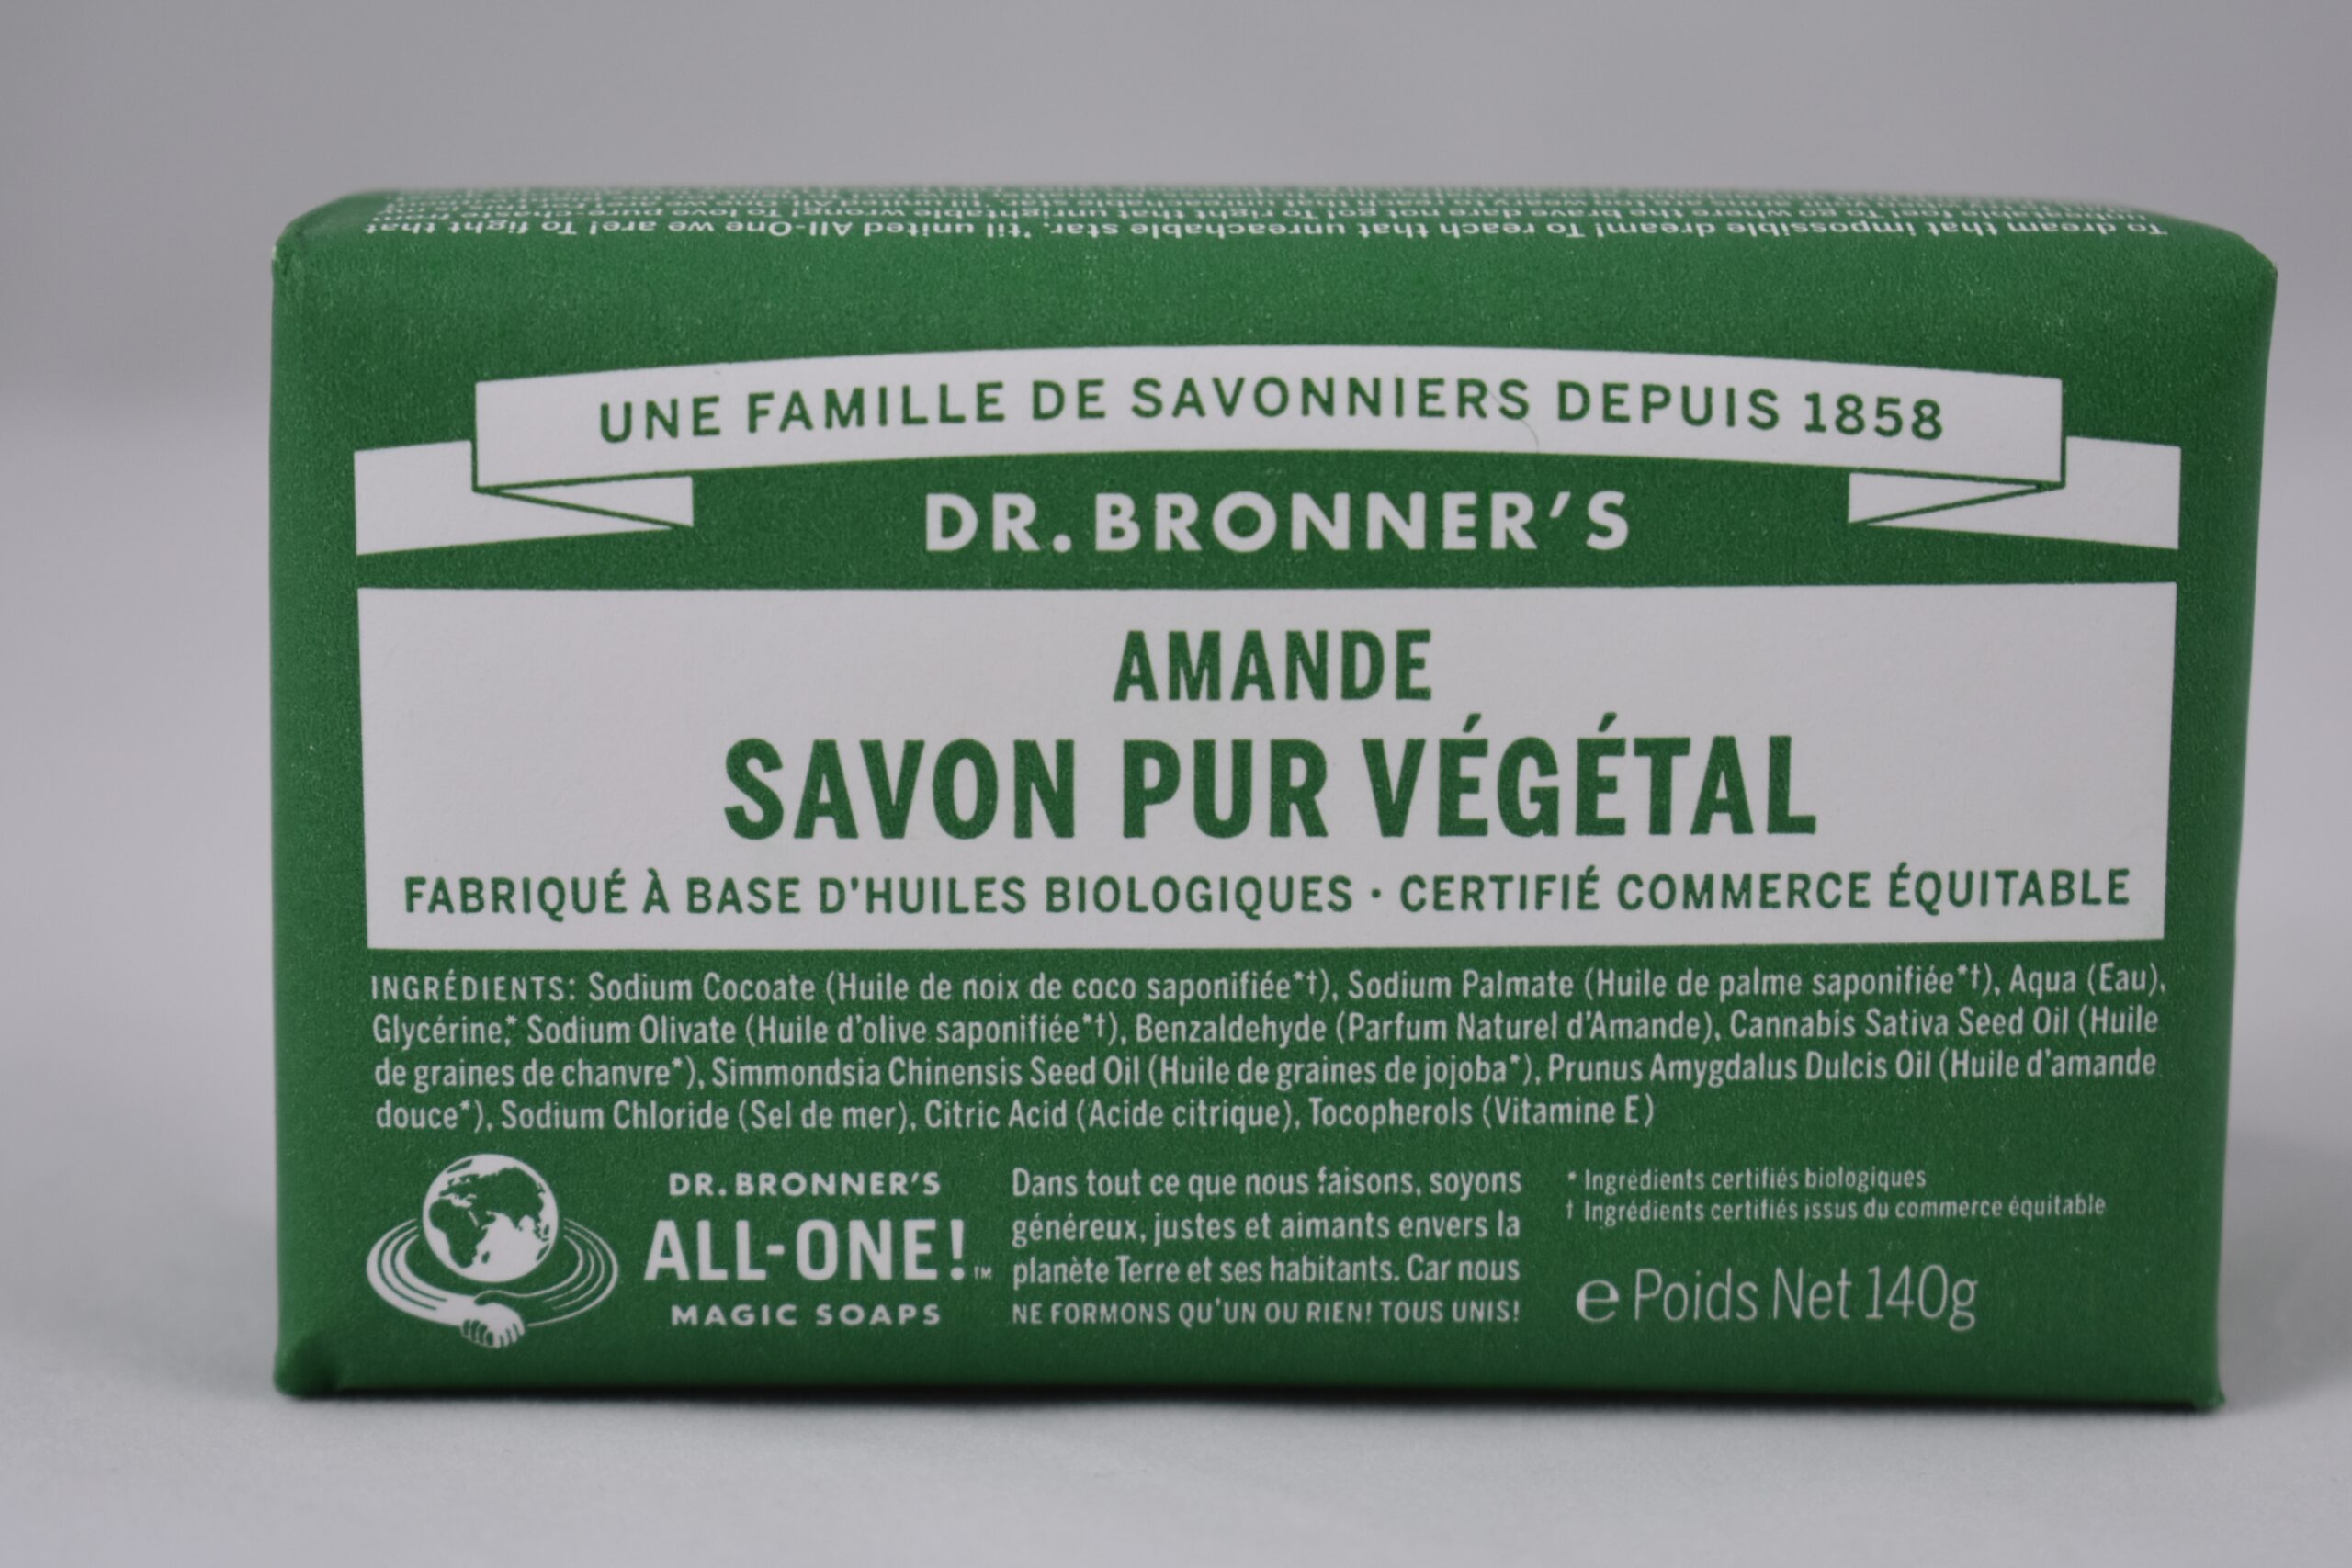 Savon pur végétal Dr Bronner's Amande